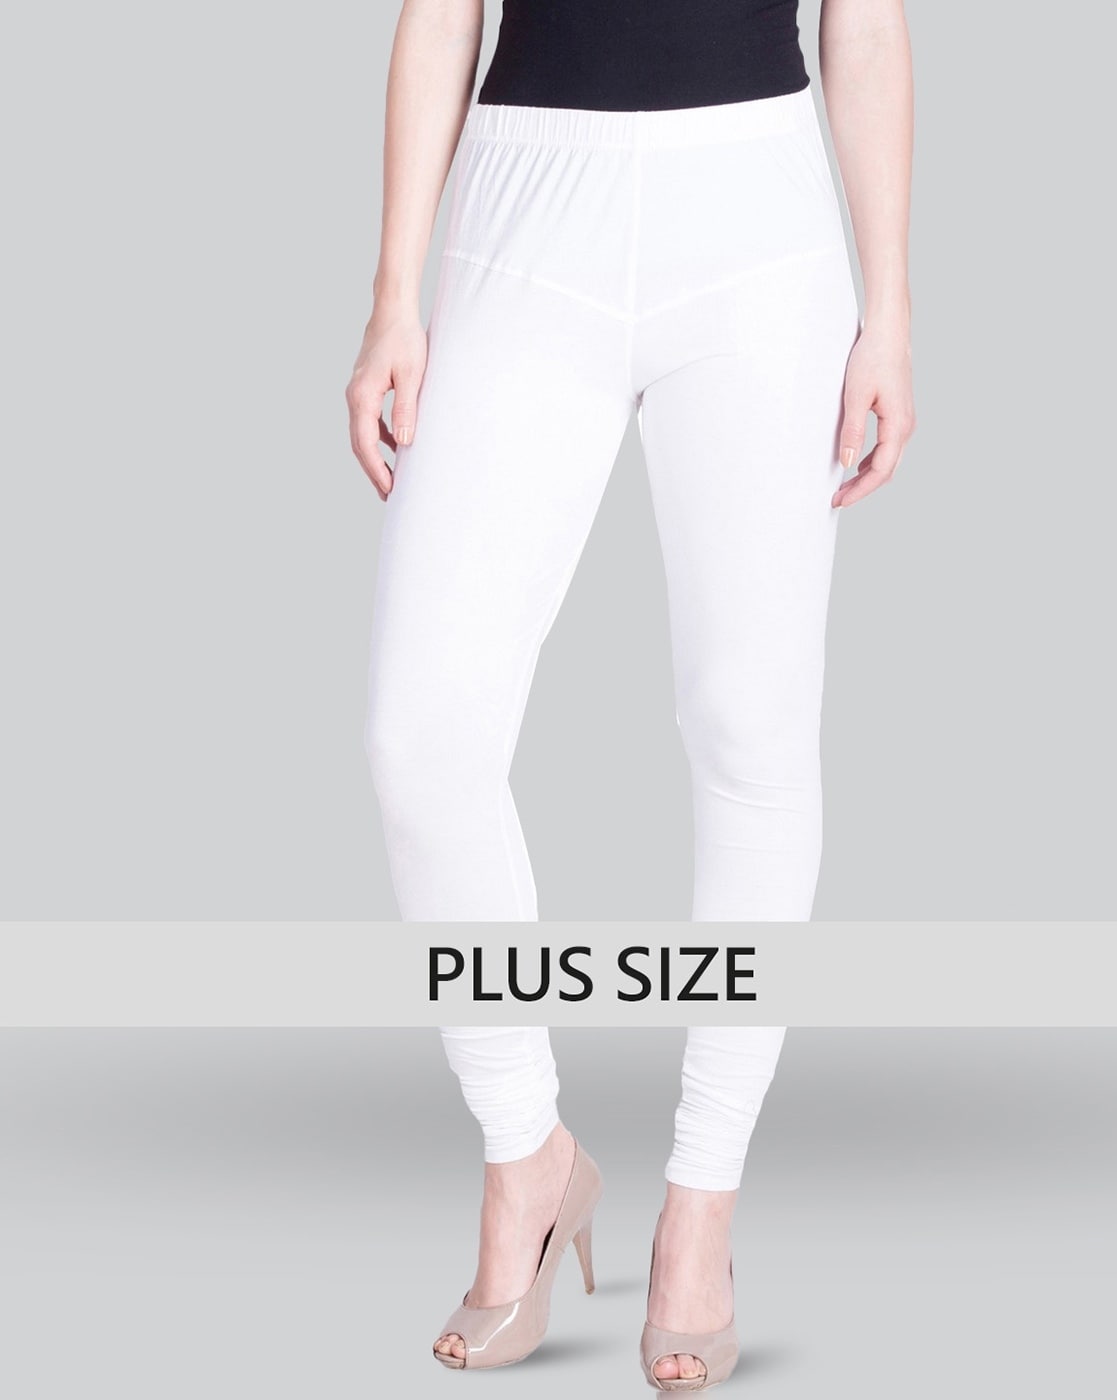 SBYOJLPB Women's Plus Size Pants Women's Loose High Waist Wide Leg Pants  Workout Out Leggings Casual Trousers Yoga Gym Pants Reduced Price White 12( XXL) - Walmart.com